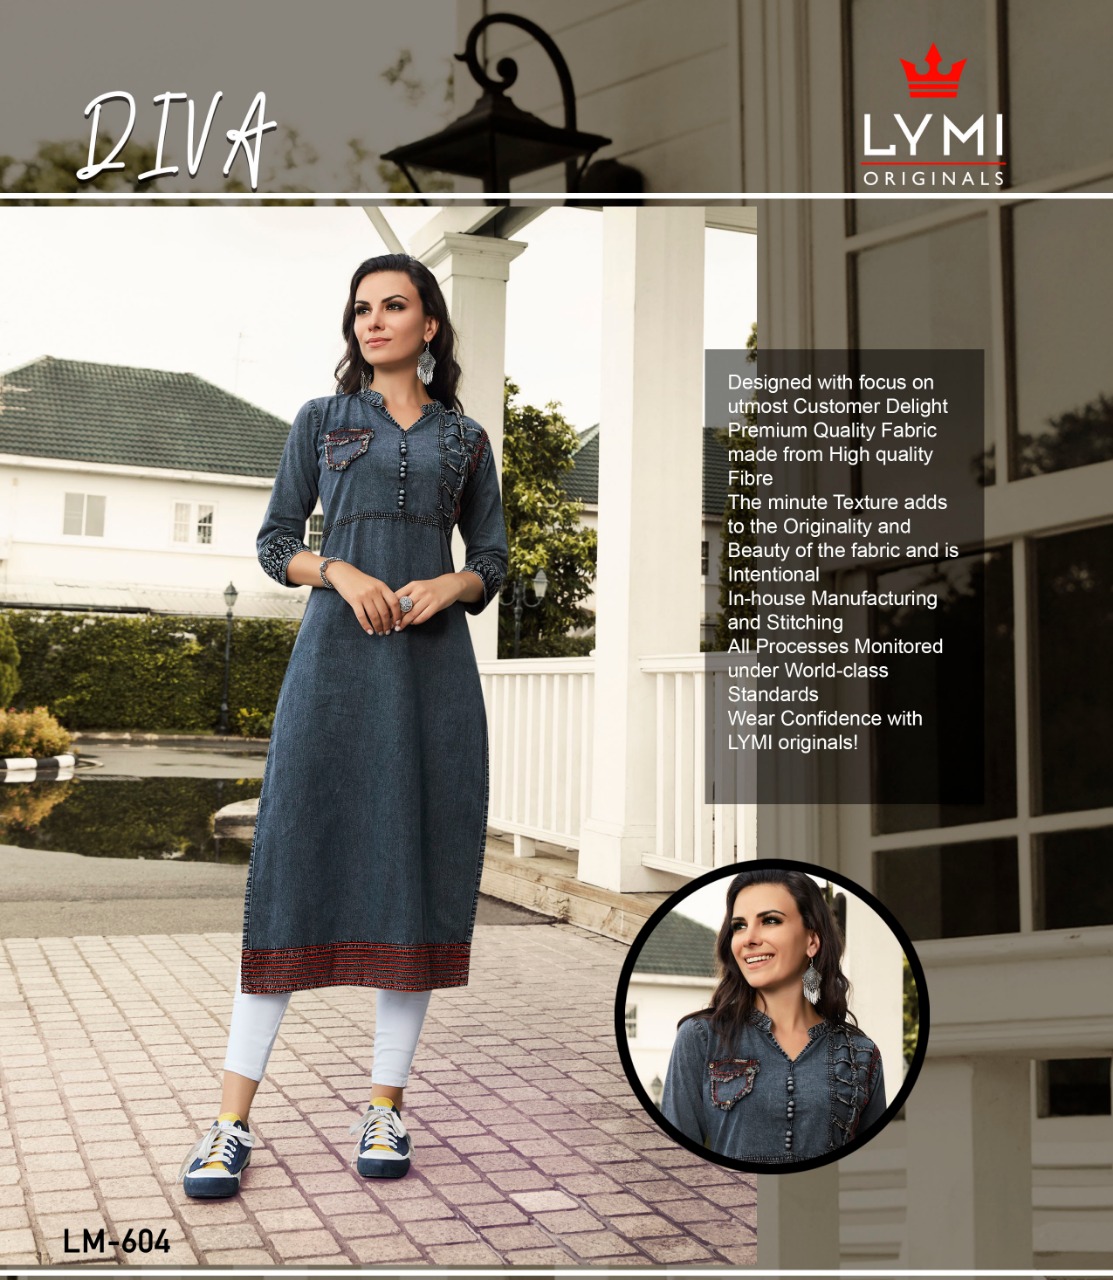 Lymi originals present diva denim style kurties collection